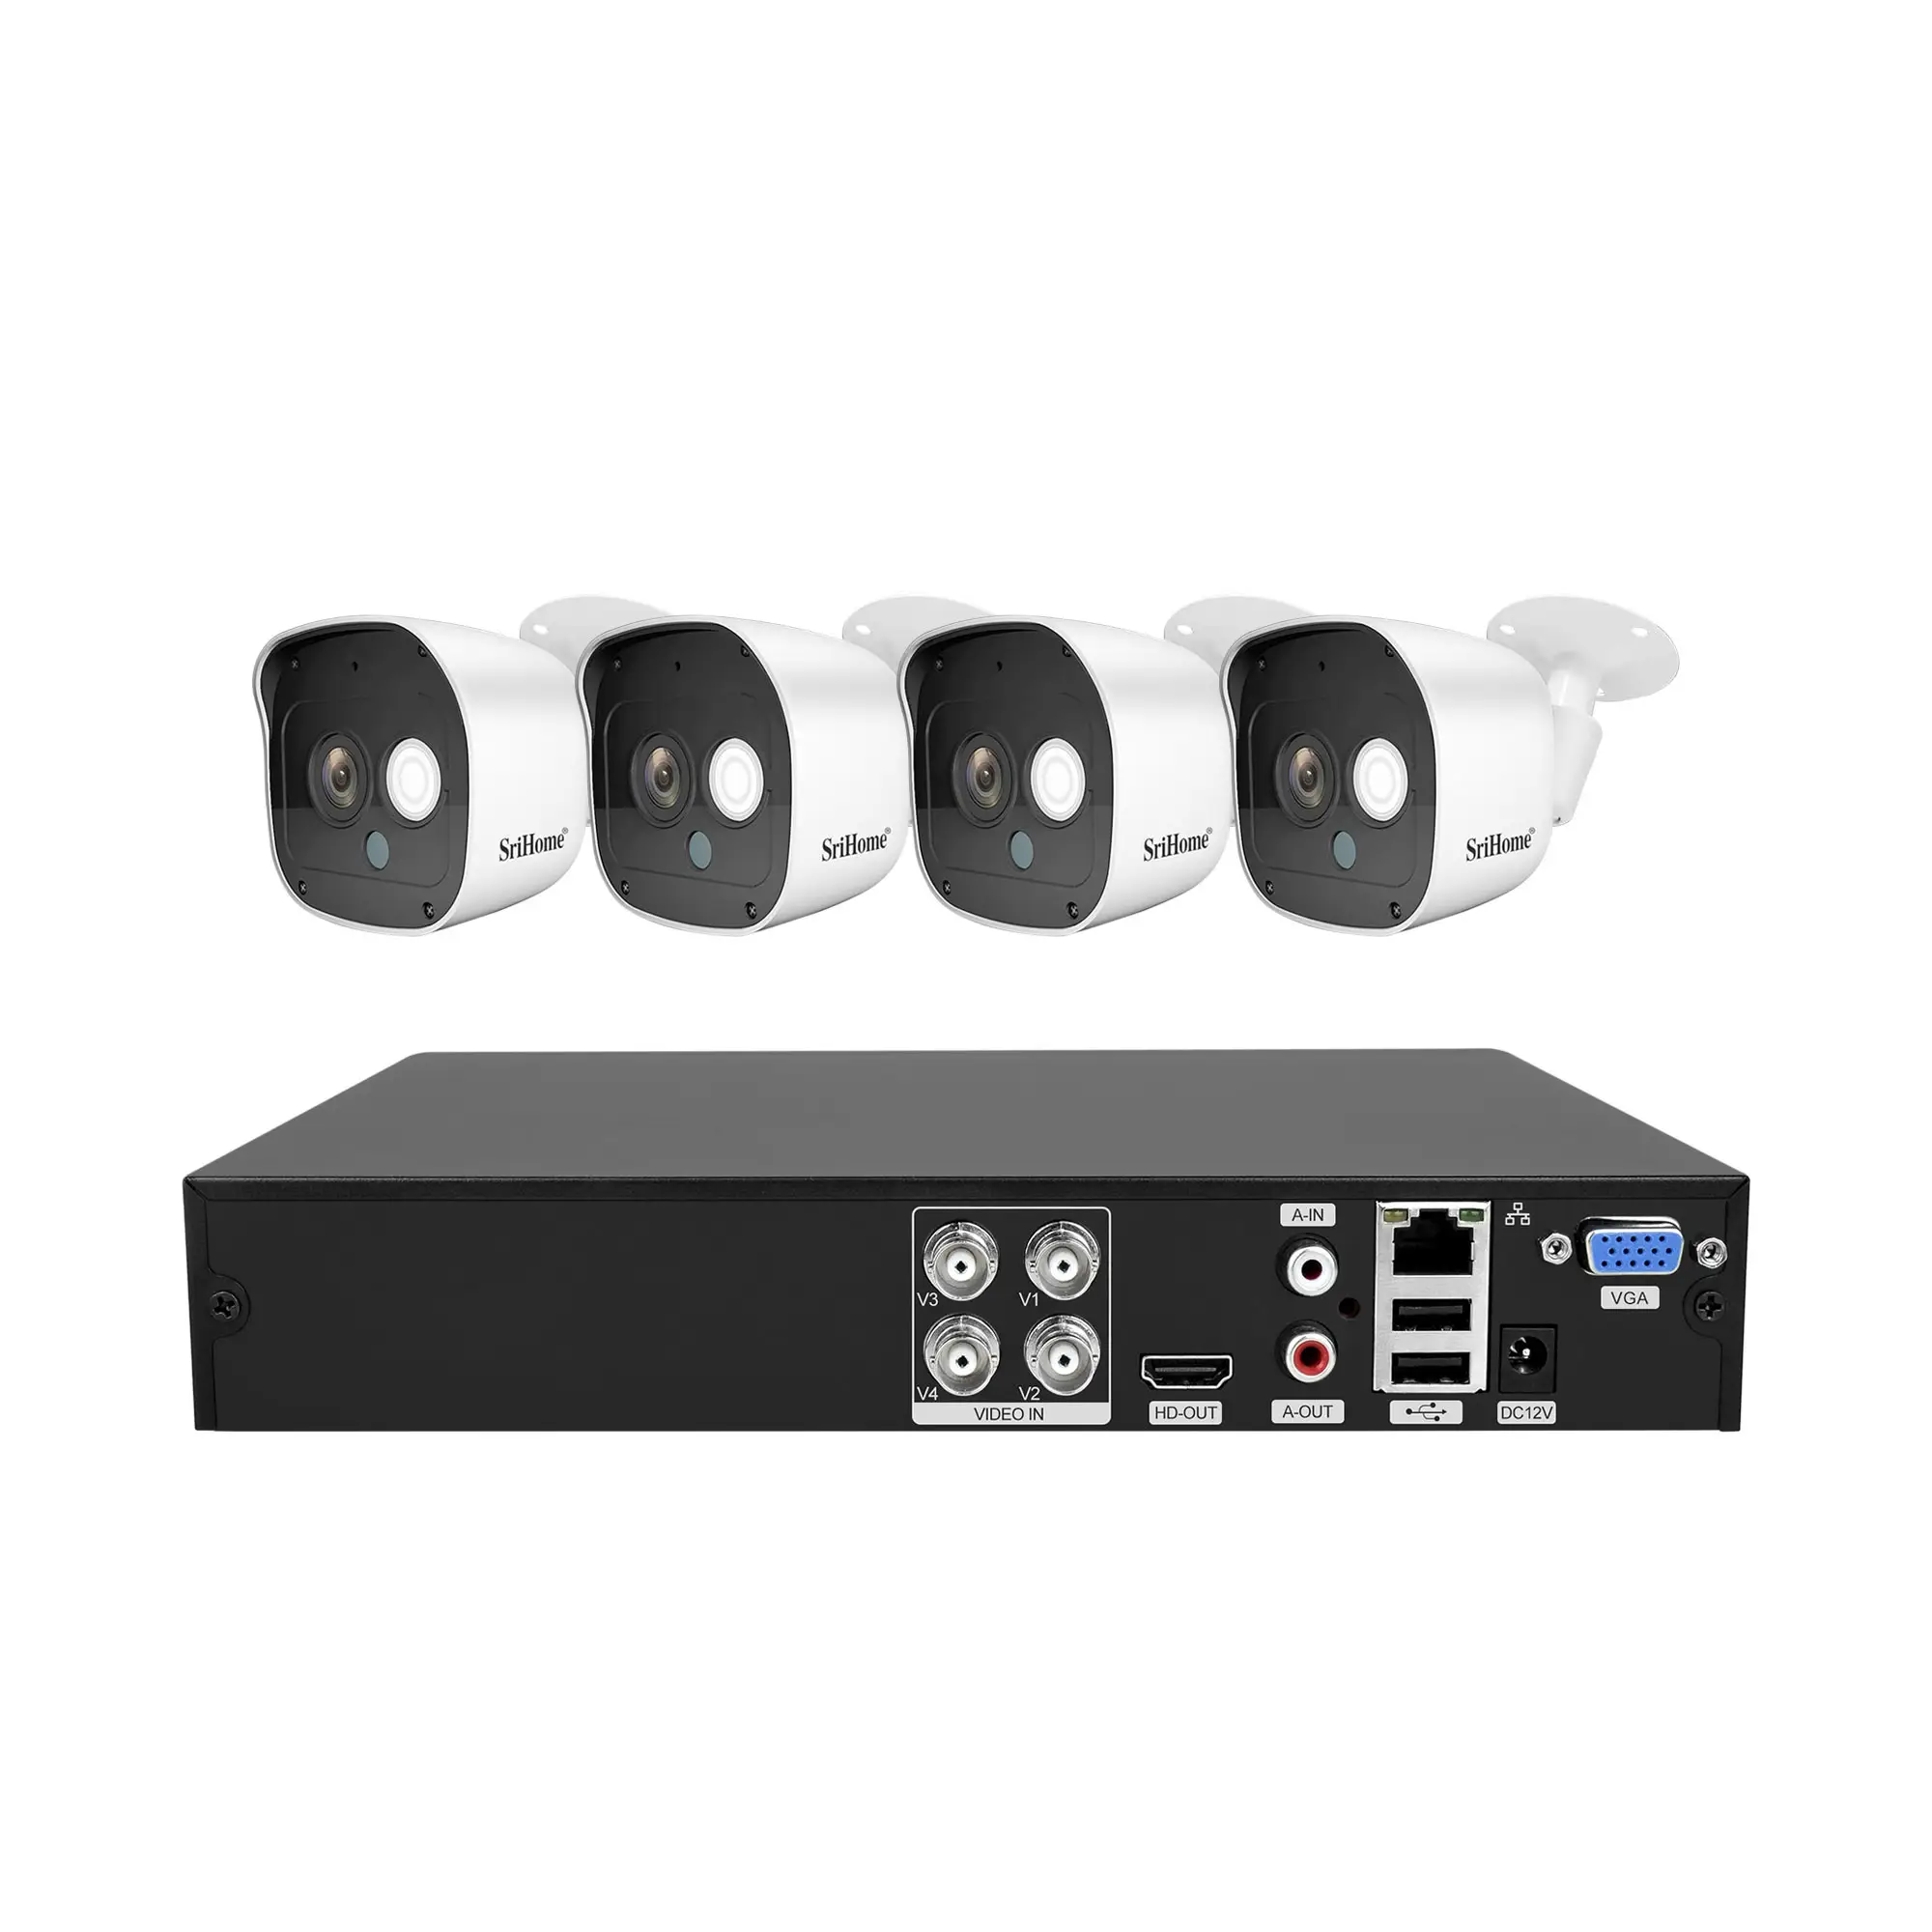 SriHomeカメラXVR TVI/AHD/DVR/NVR/CVICctvカメラシステム監視システム